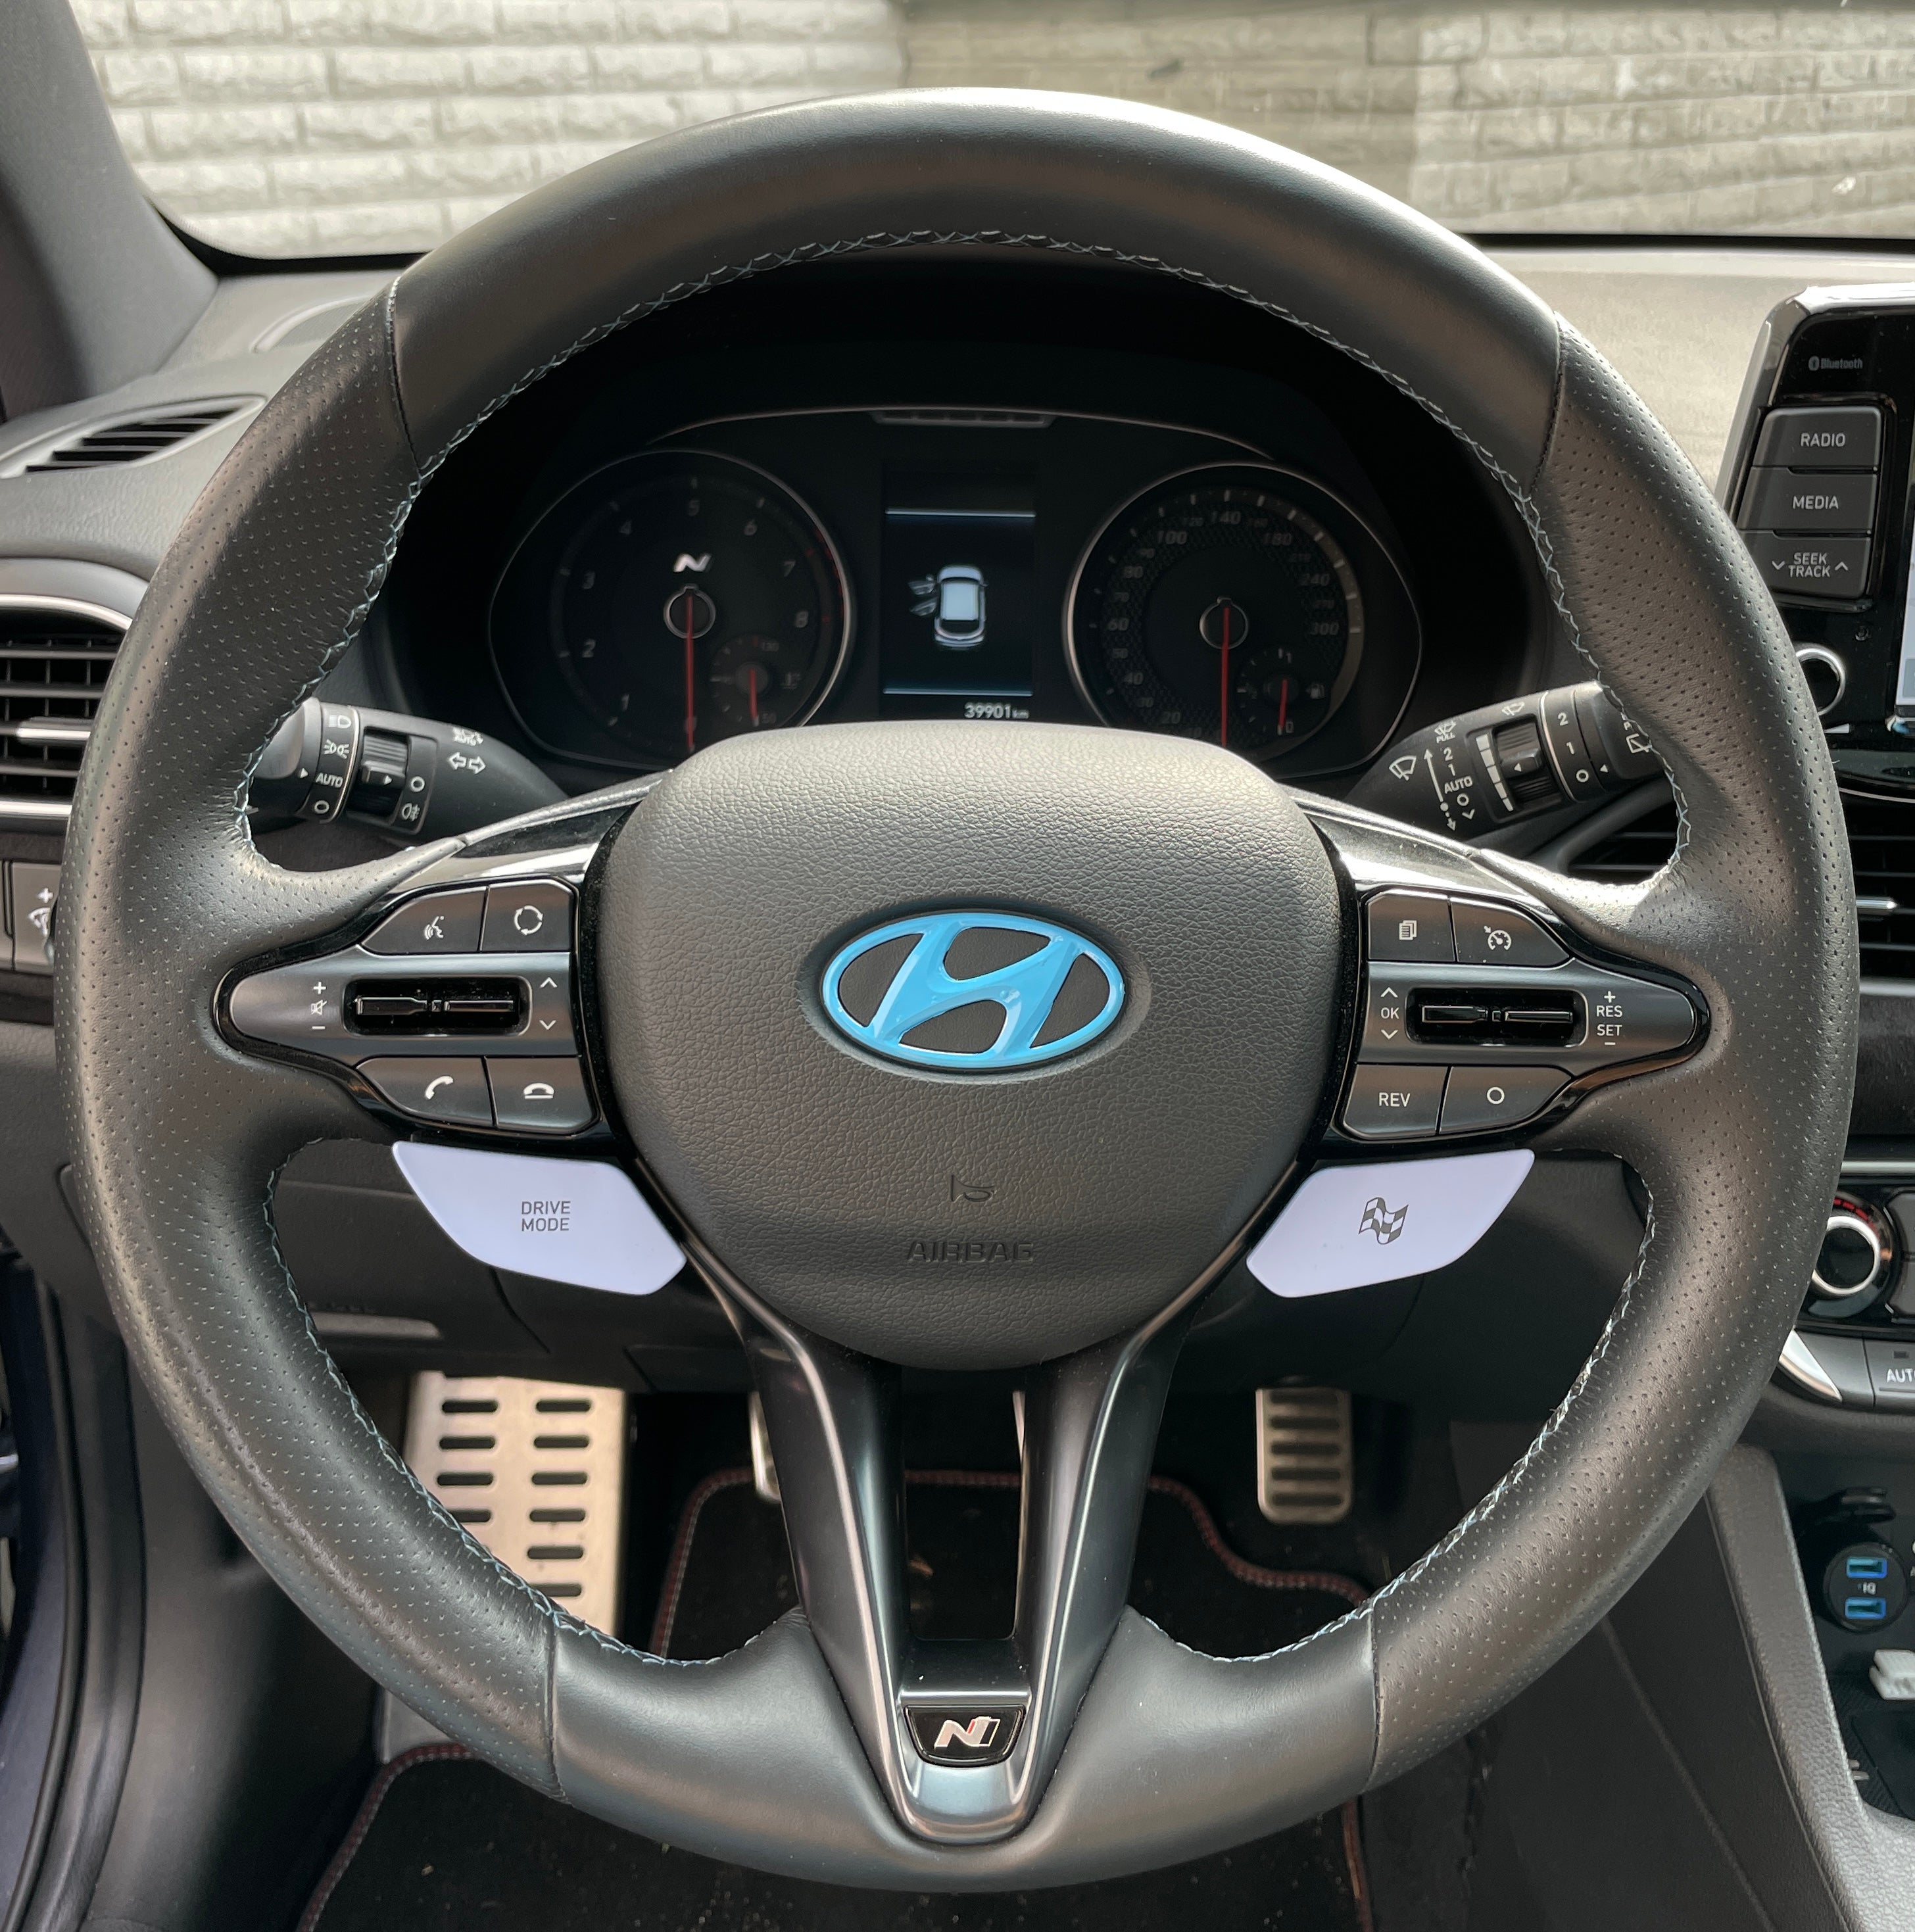 Sticker for Hyundai logo steering wheel